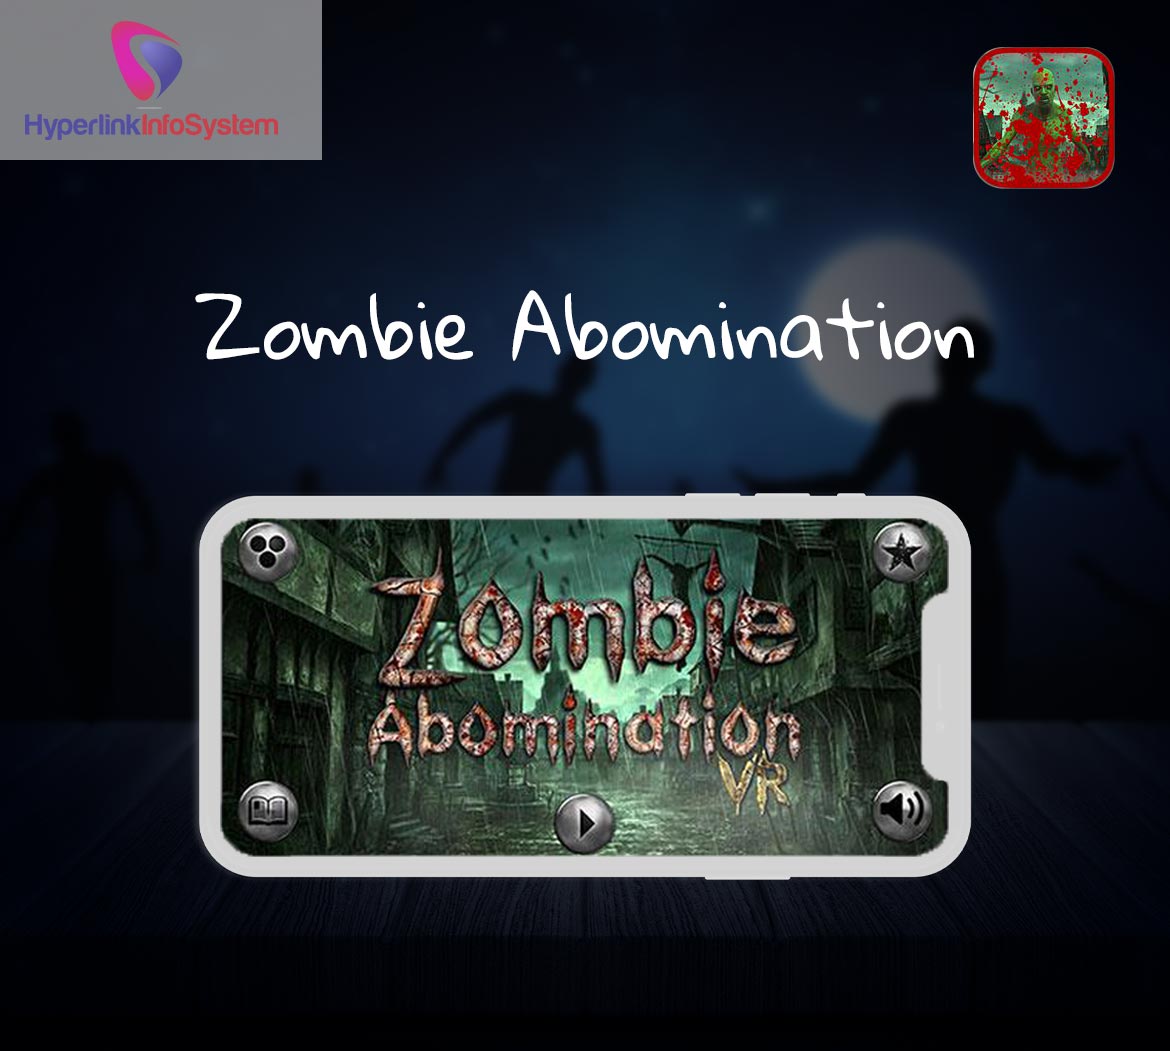 zombie game